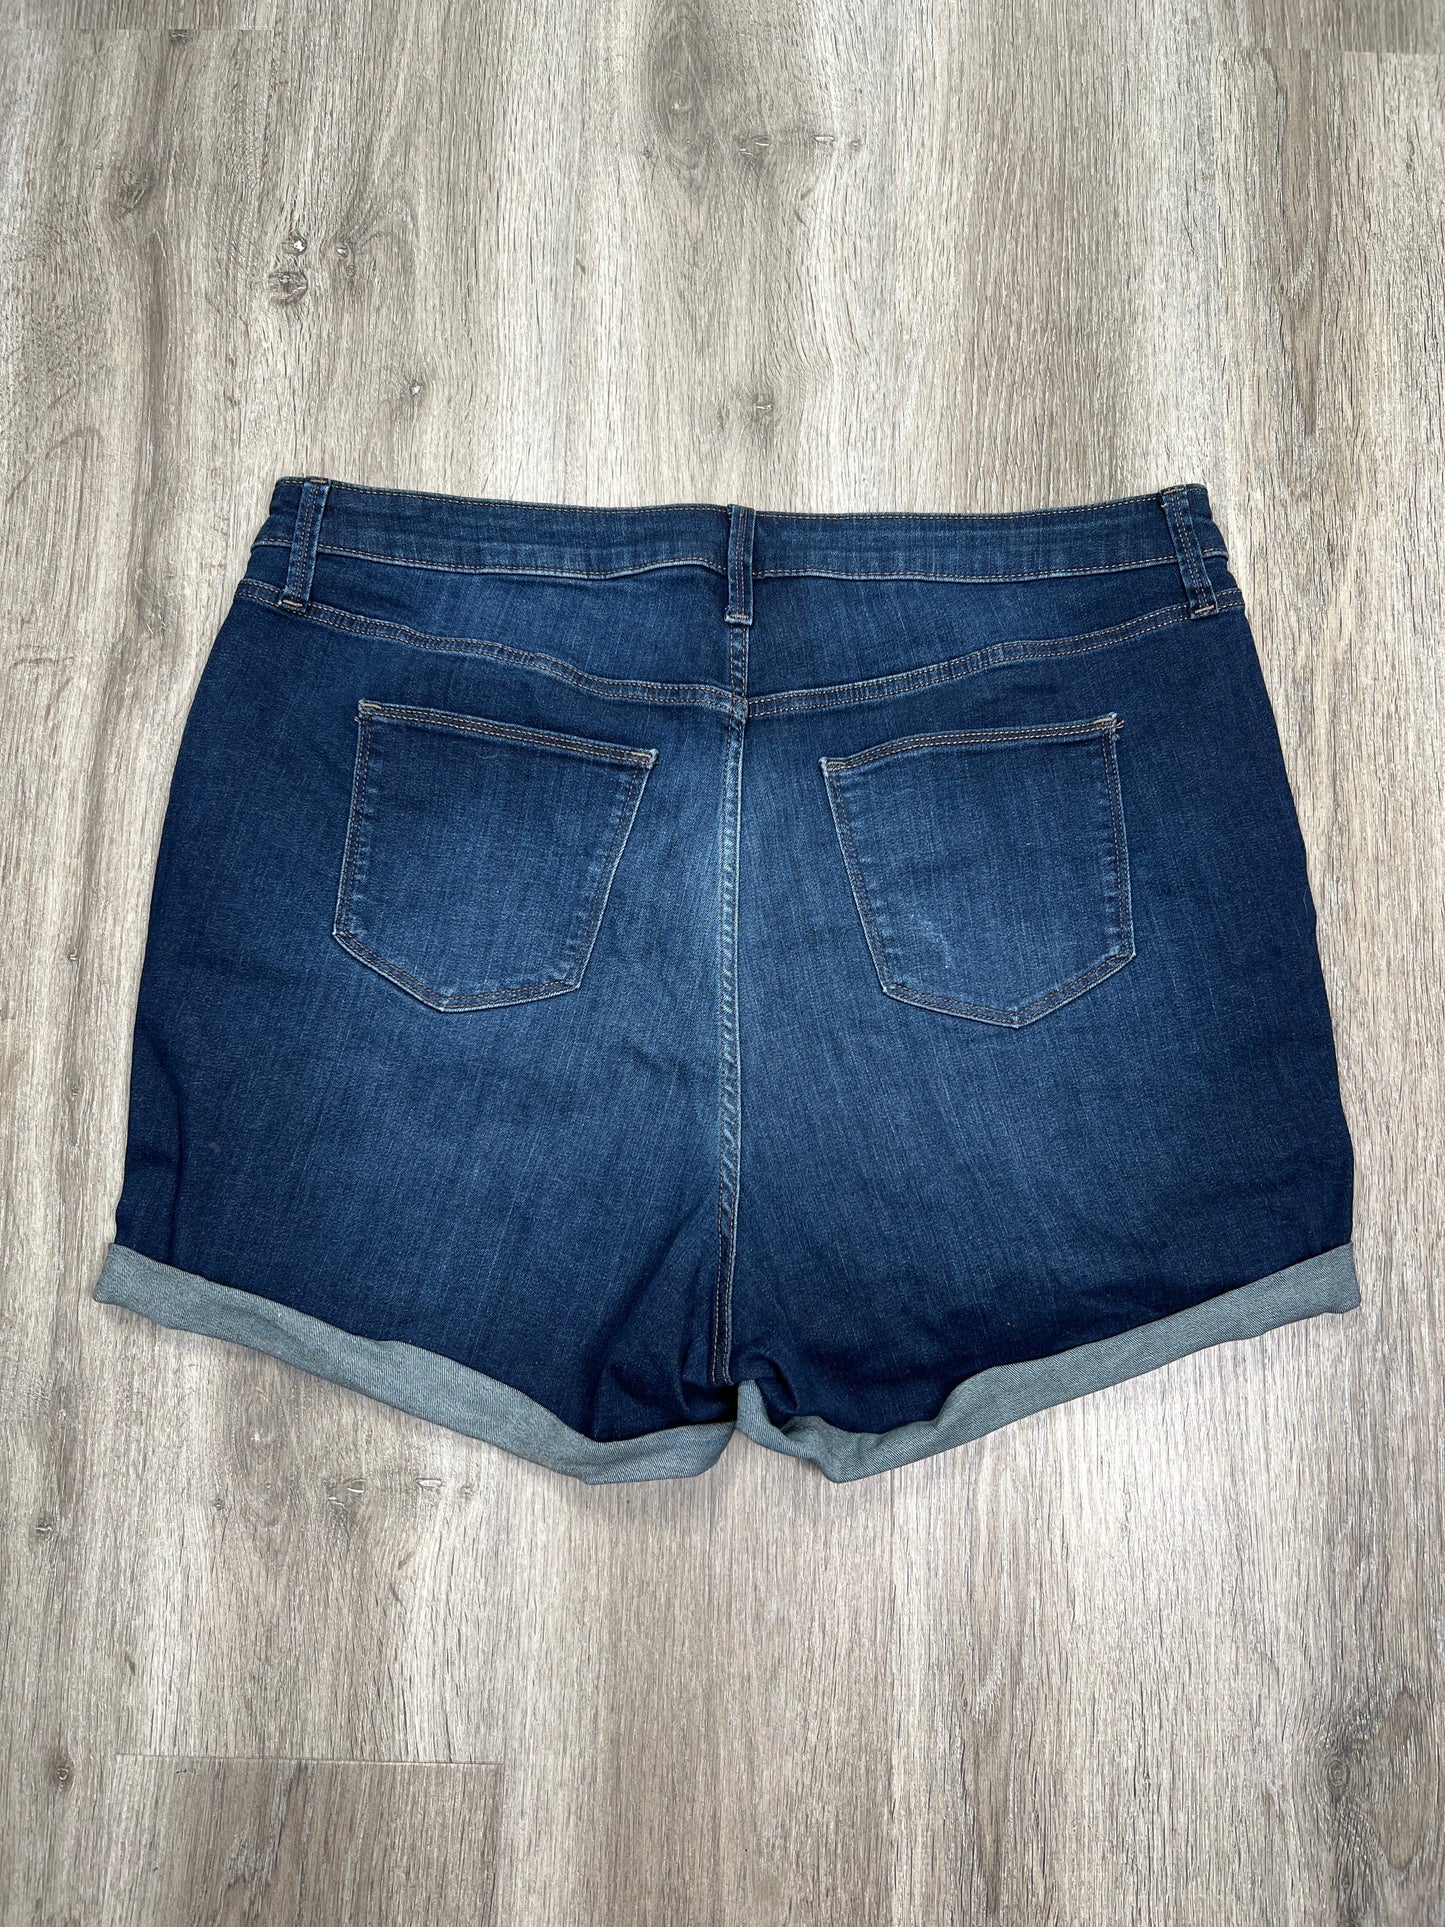 Blue Denim Shorts Universal Thread, Size Xl